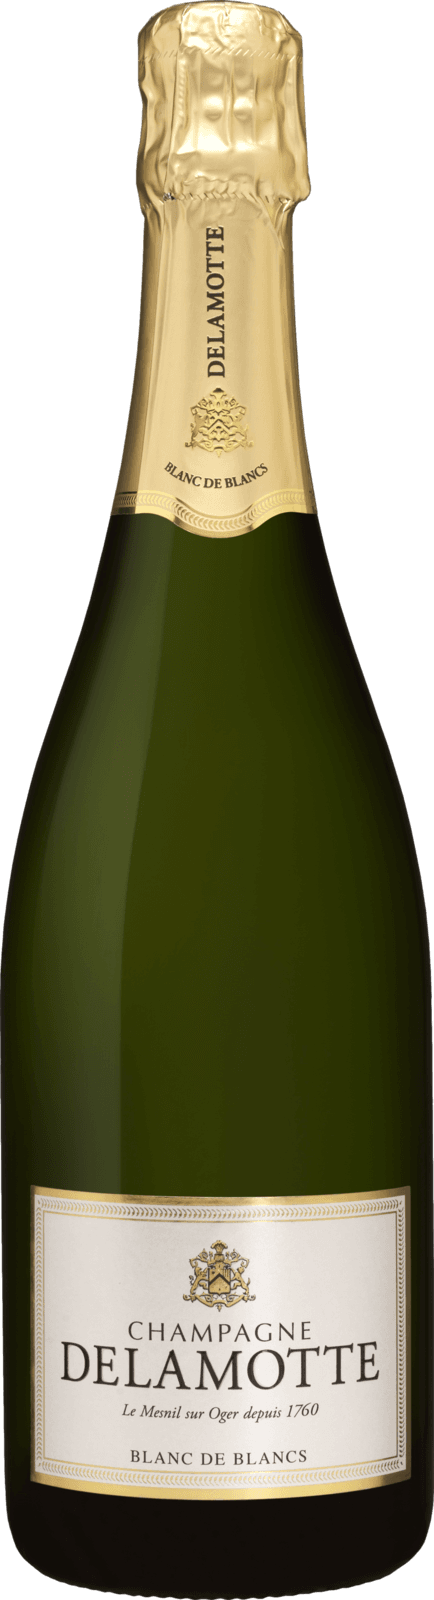 Champagne Delamotte Blanc de Blancs Brut 2018